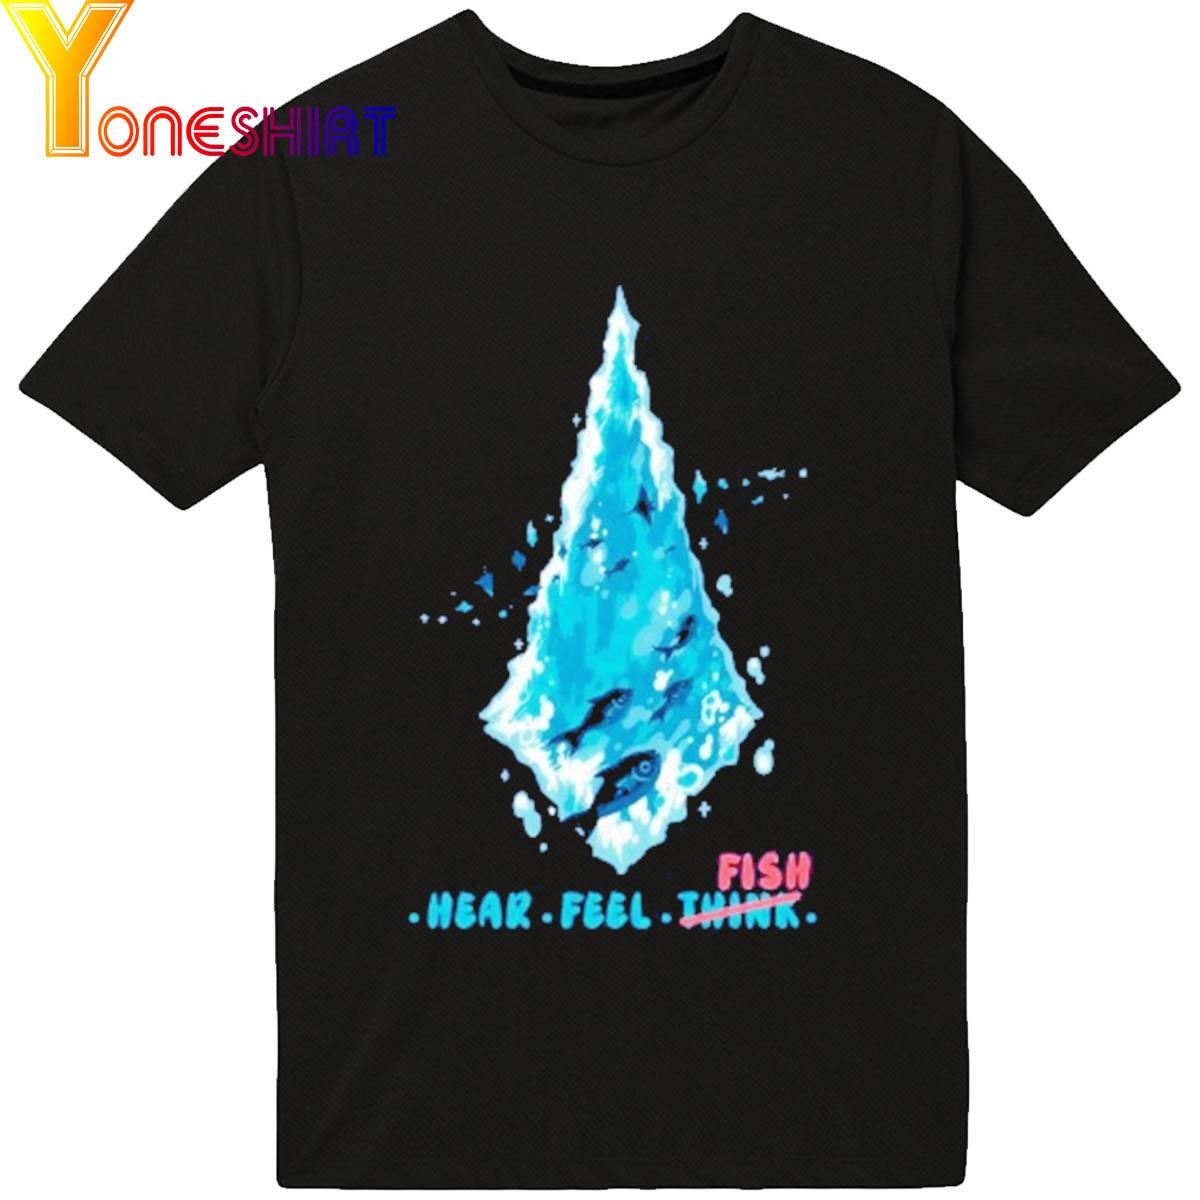 Hear Feel Fish Shirt